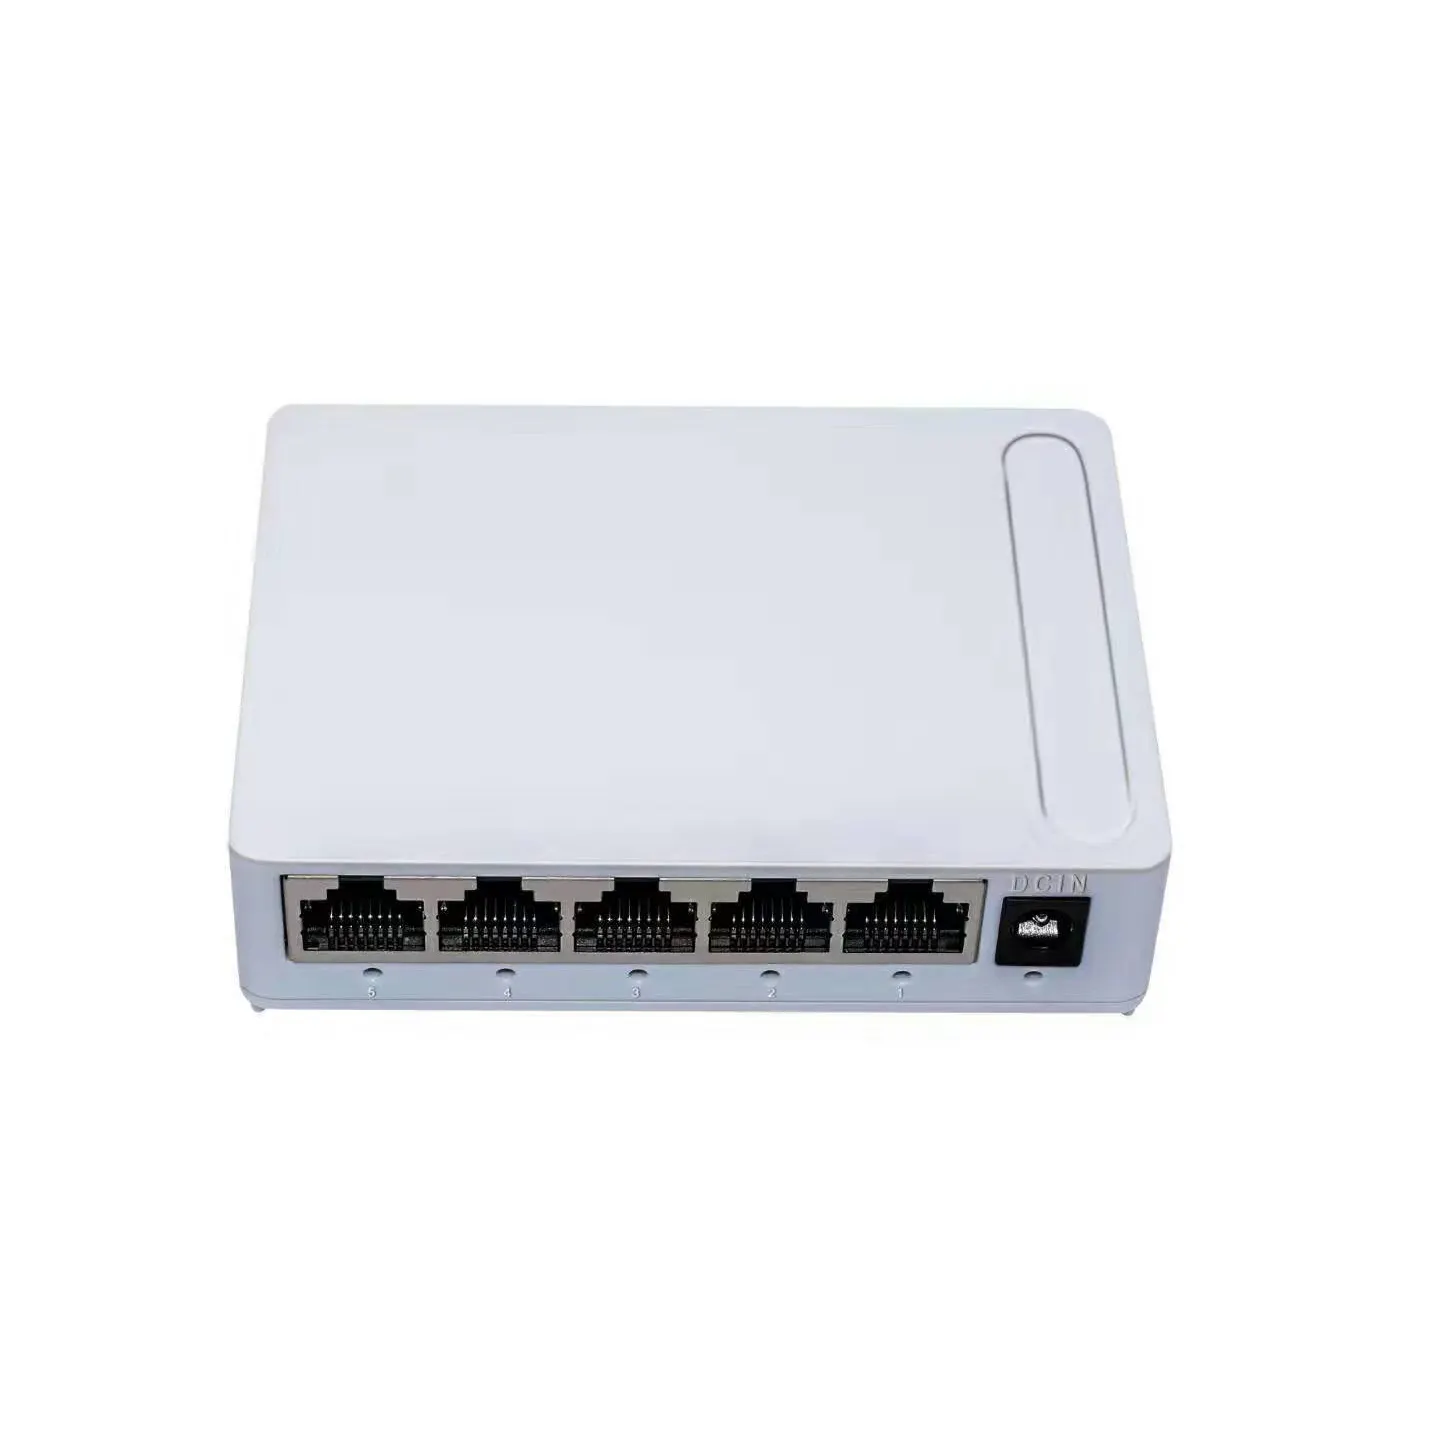 Fiber Optic Ethernet Unmanaged Switch Jaringan Gigabit Switch 5 Port